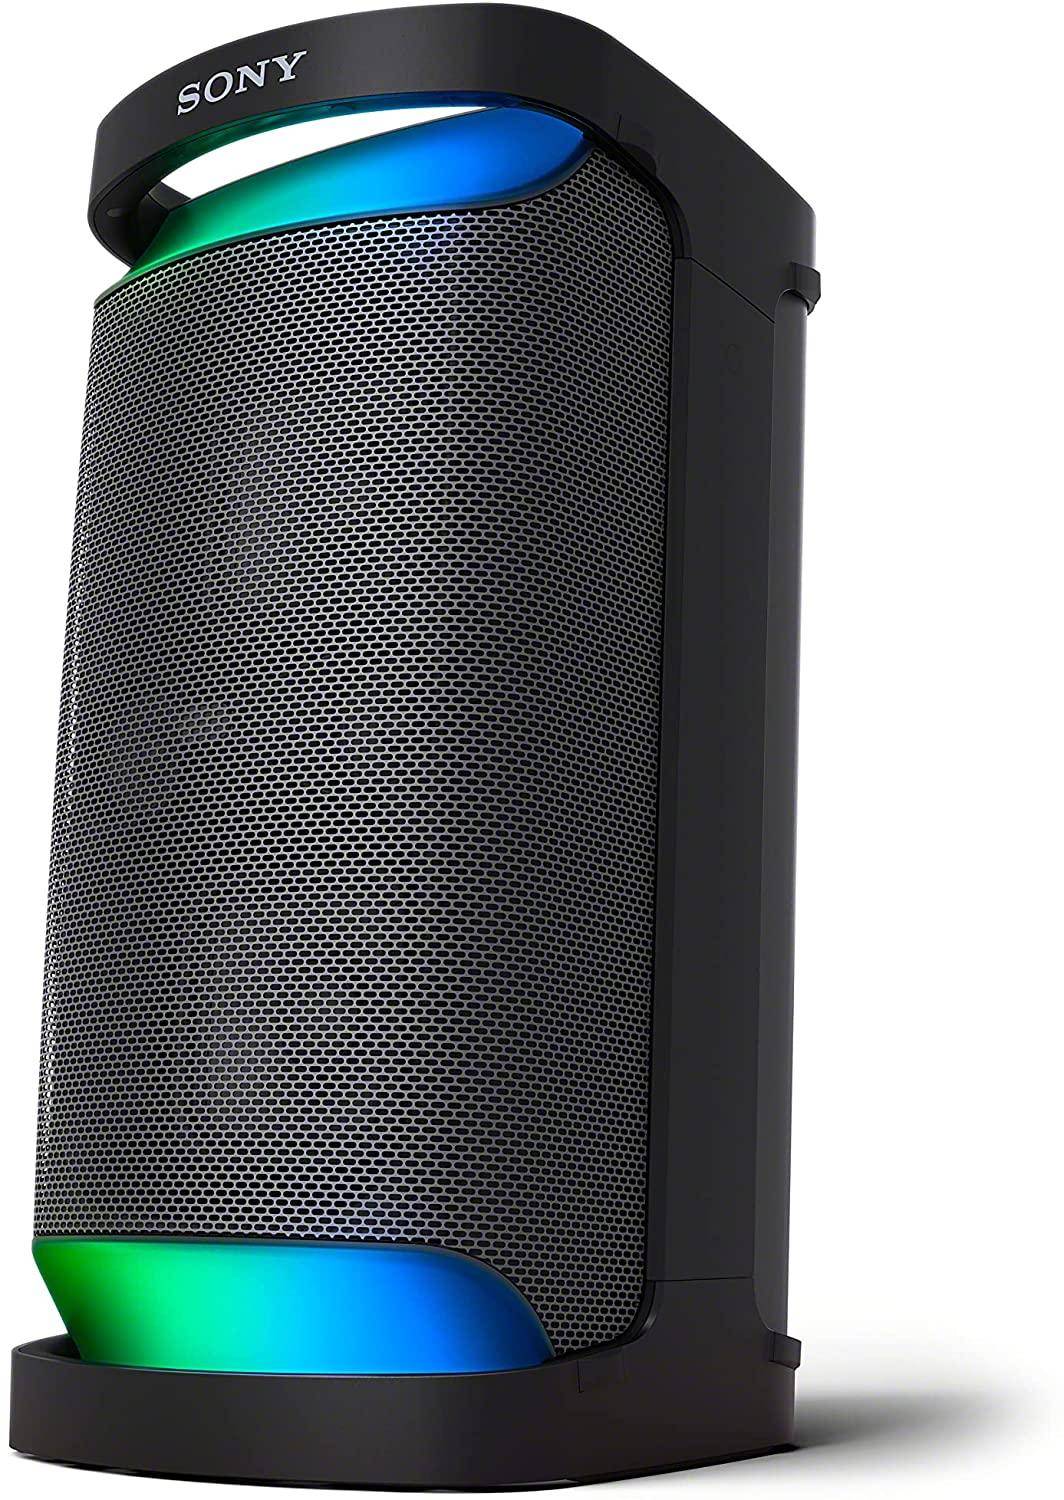 SONY XP500 X-Series Portable Wireless Speaker zoom image